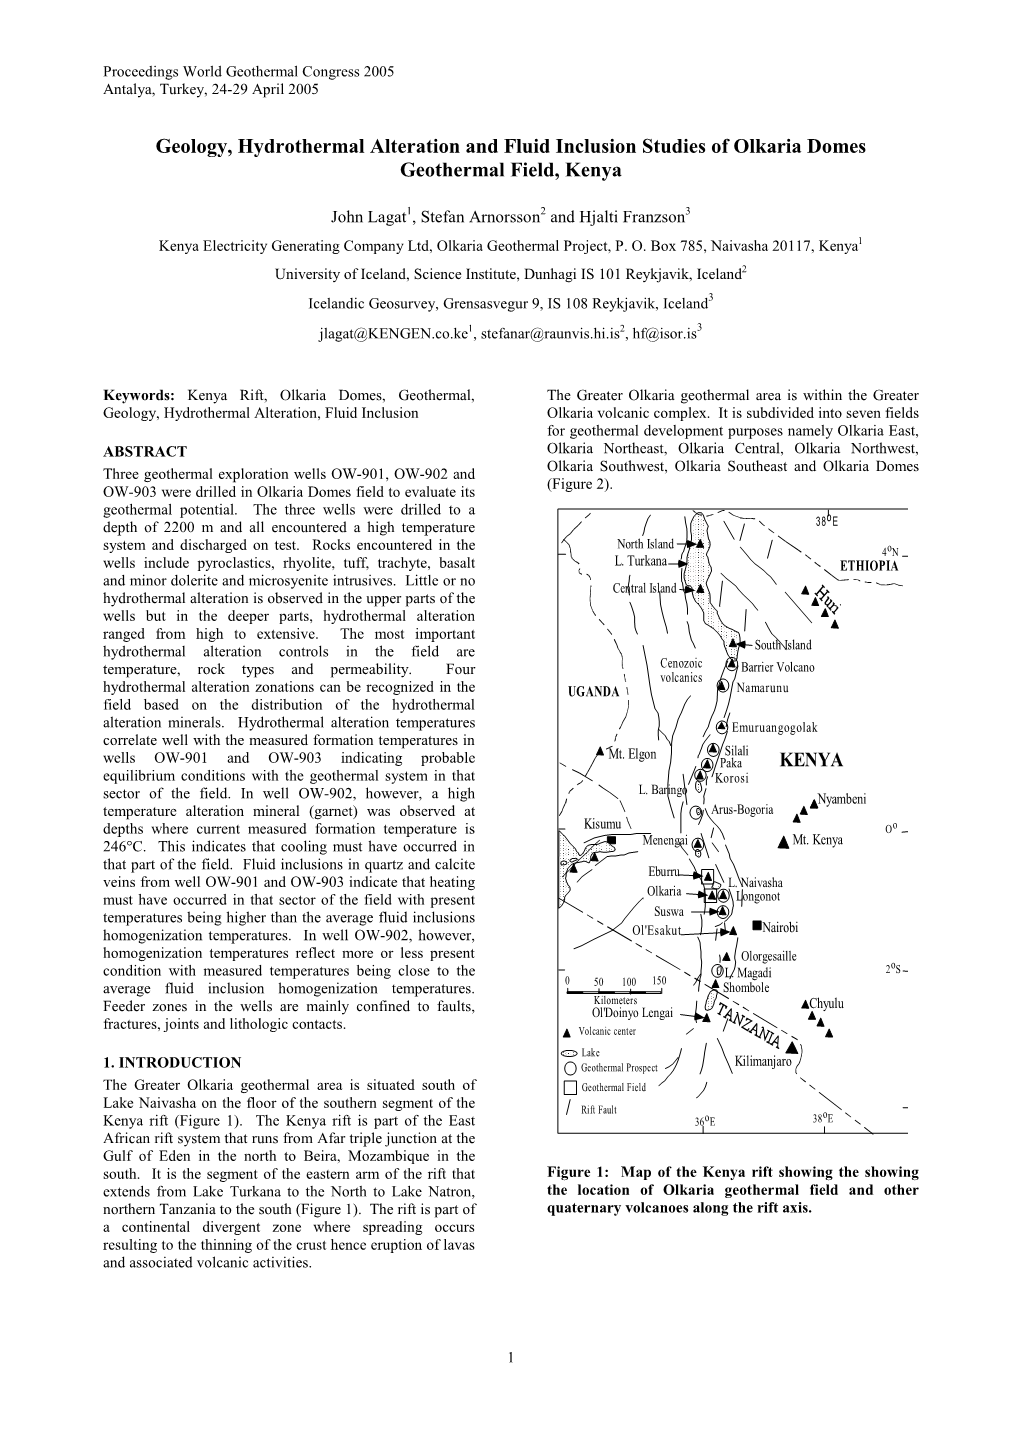 Geology, Hydrothermal Alteration and Fluid Inclusion Studies of Olkaria Domes Geothermal Field, Kenya